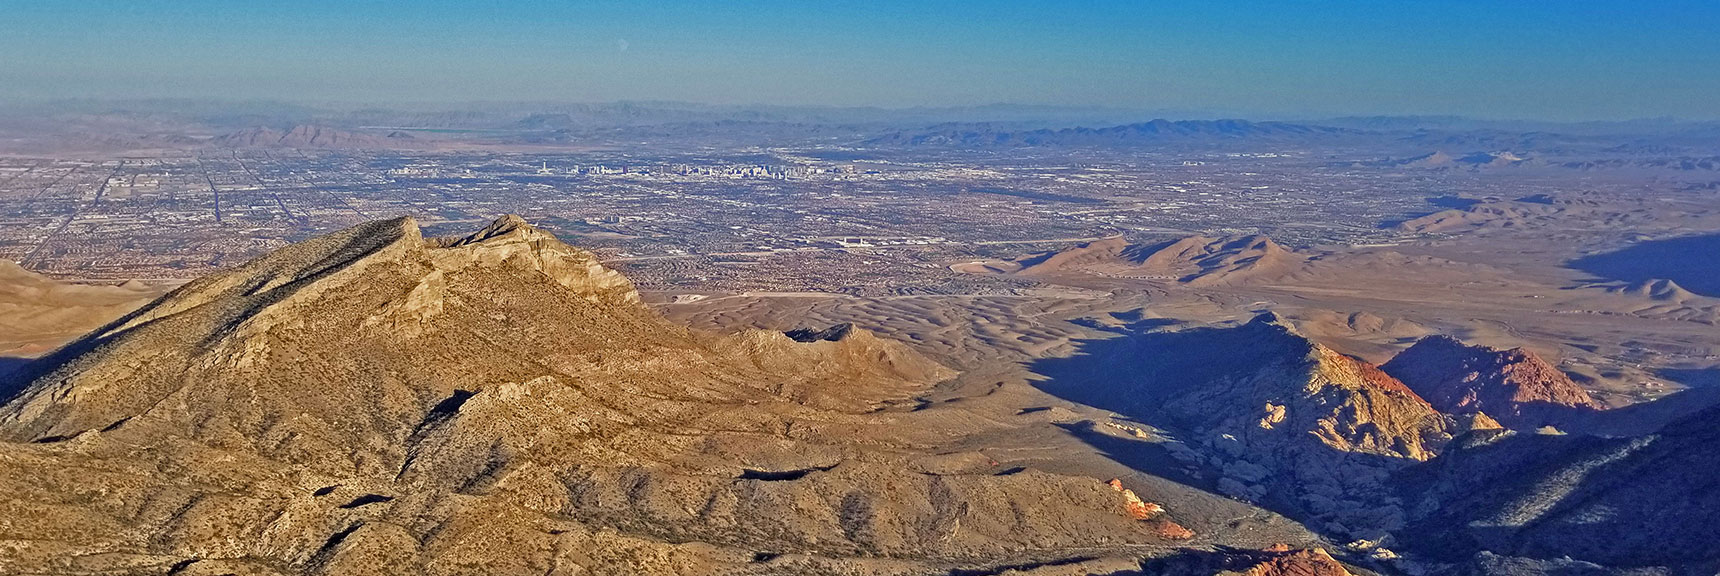 Damsel Peak and Calico Basin from El Padre Mt Approach Ridge | La Madre Mountain,, El Padre Mountain, Burnt Peak | La Madre Mountains Wilderness, Nevada